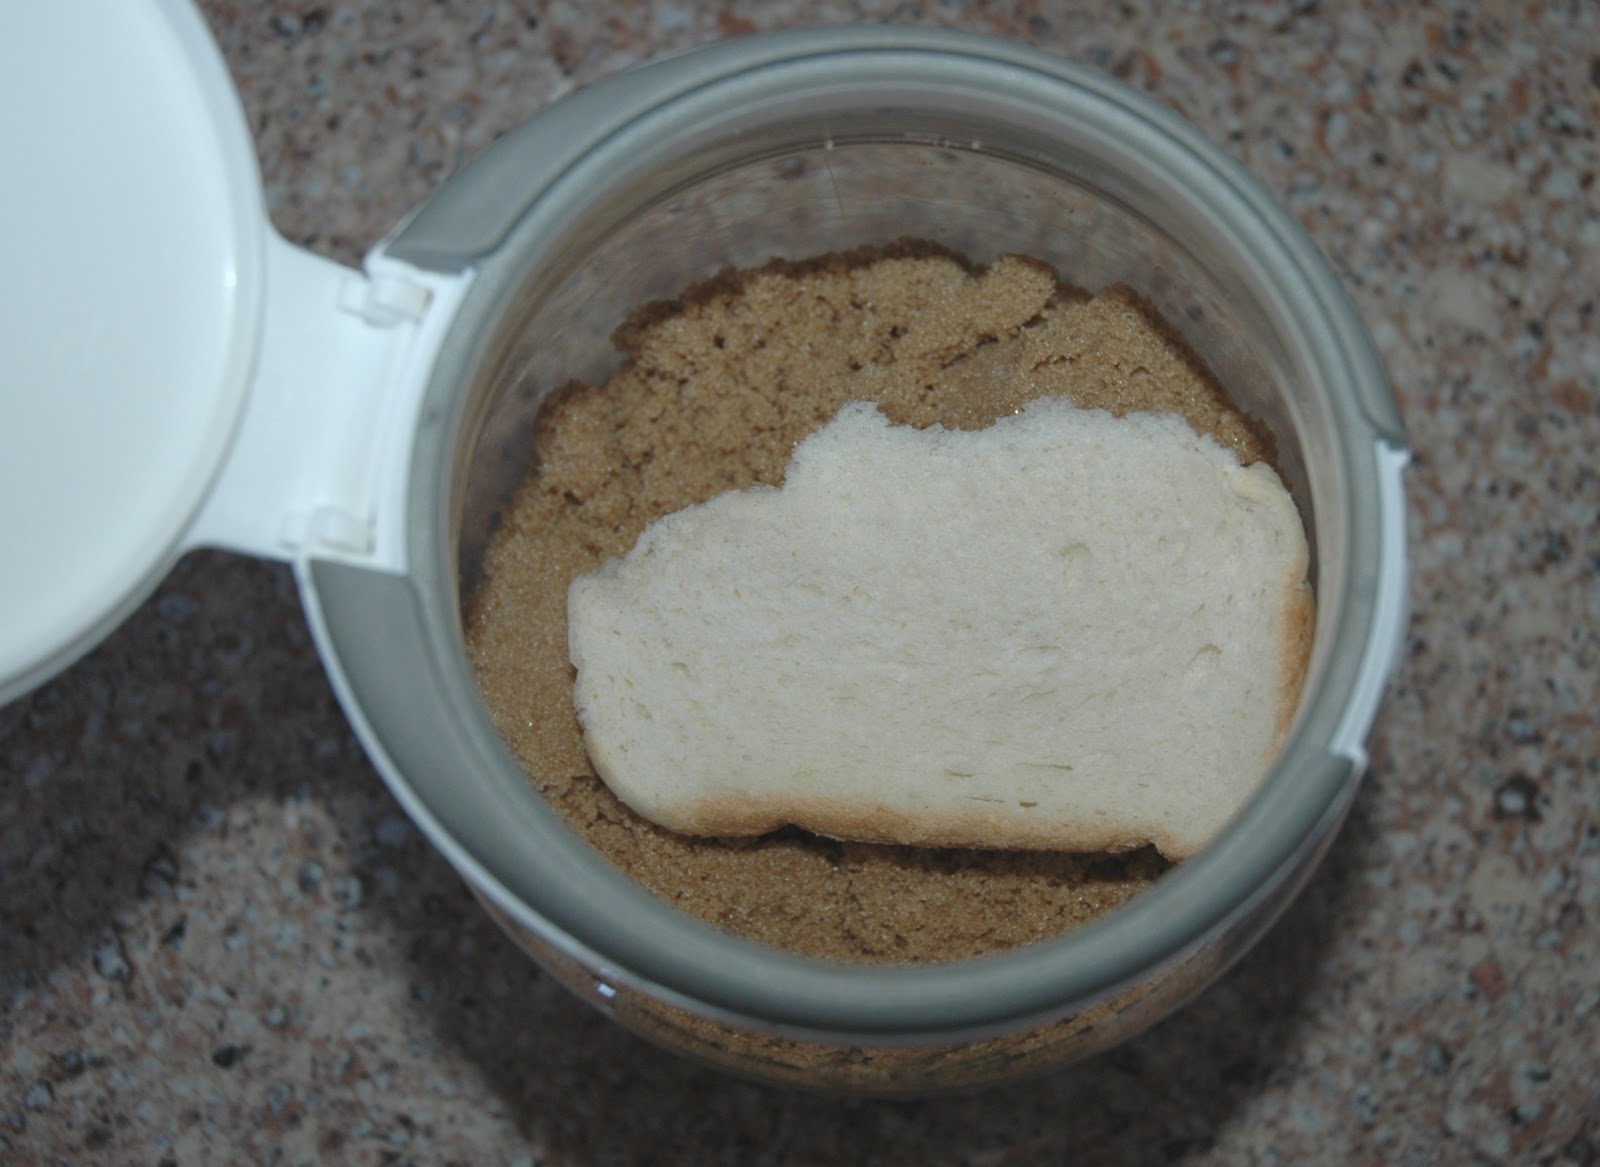 http://1.bp.blogspot.com/-yX5dOQB557Q/USeeogZSmVI/AAAAAAAAIGk/J9lYc3Sg8vw/s1600/brown+sugar+bread.jpg